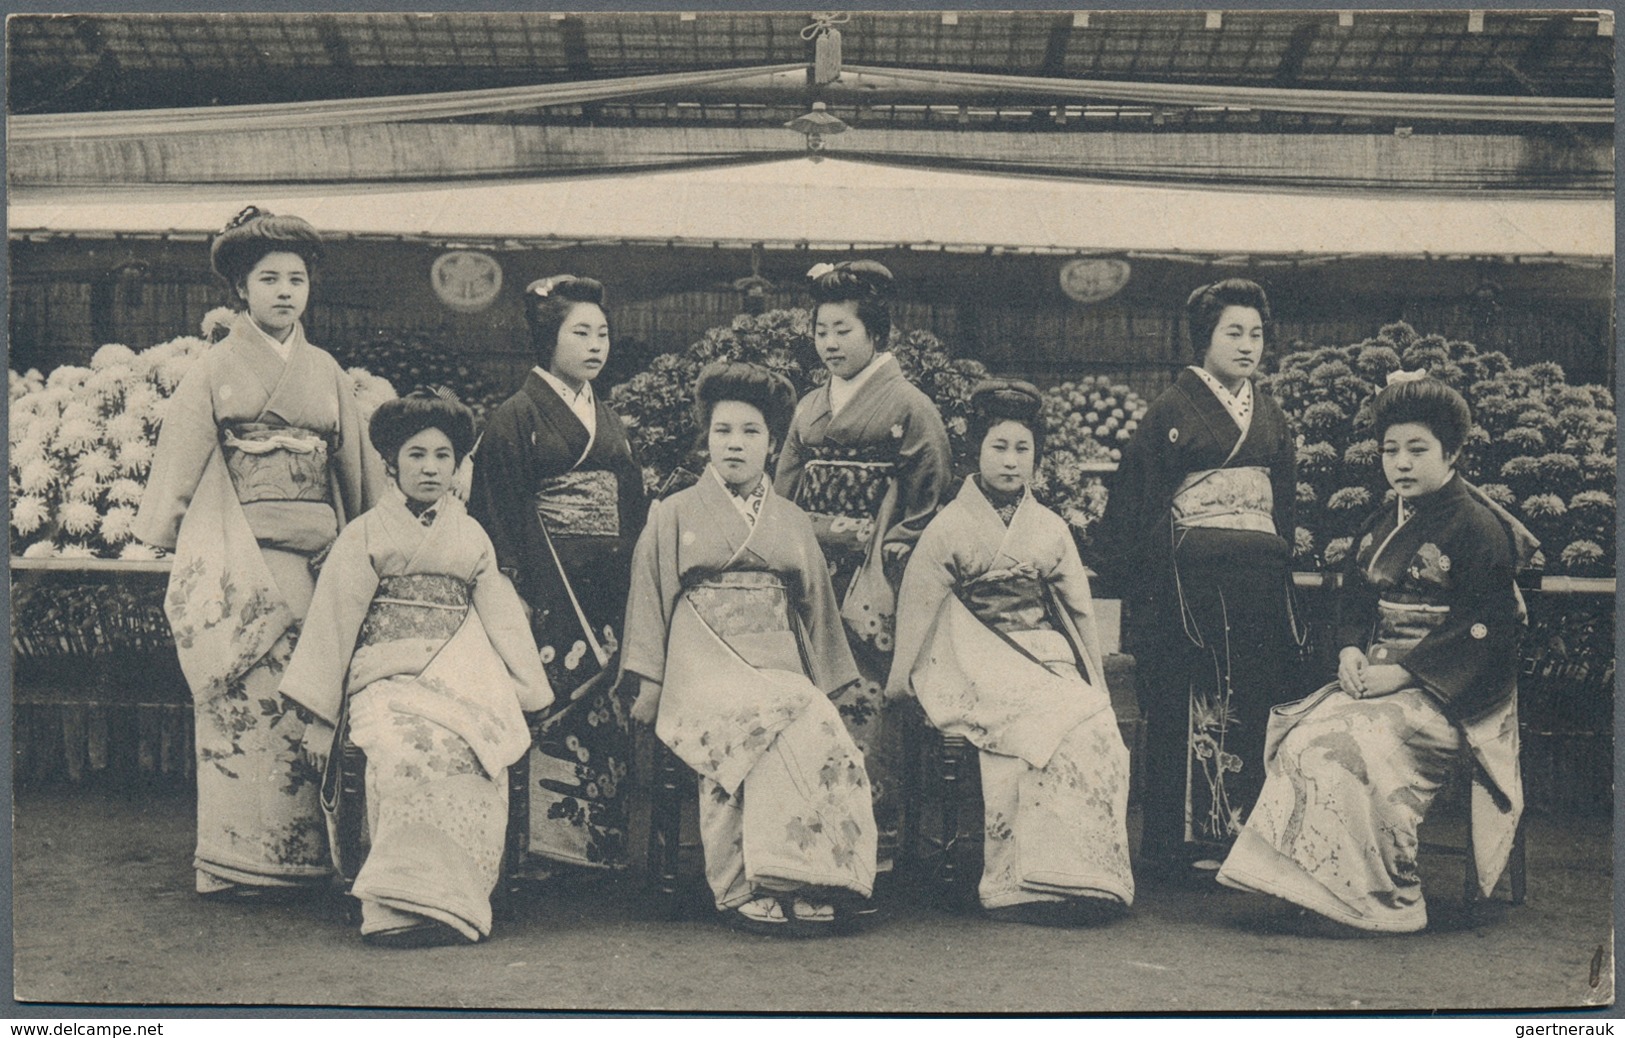 Japan - Besonderheiten: 1900/30 (ca.) 20 ppc (two mailed) showing ladies, geishas with interesting h